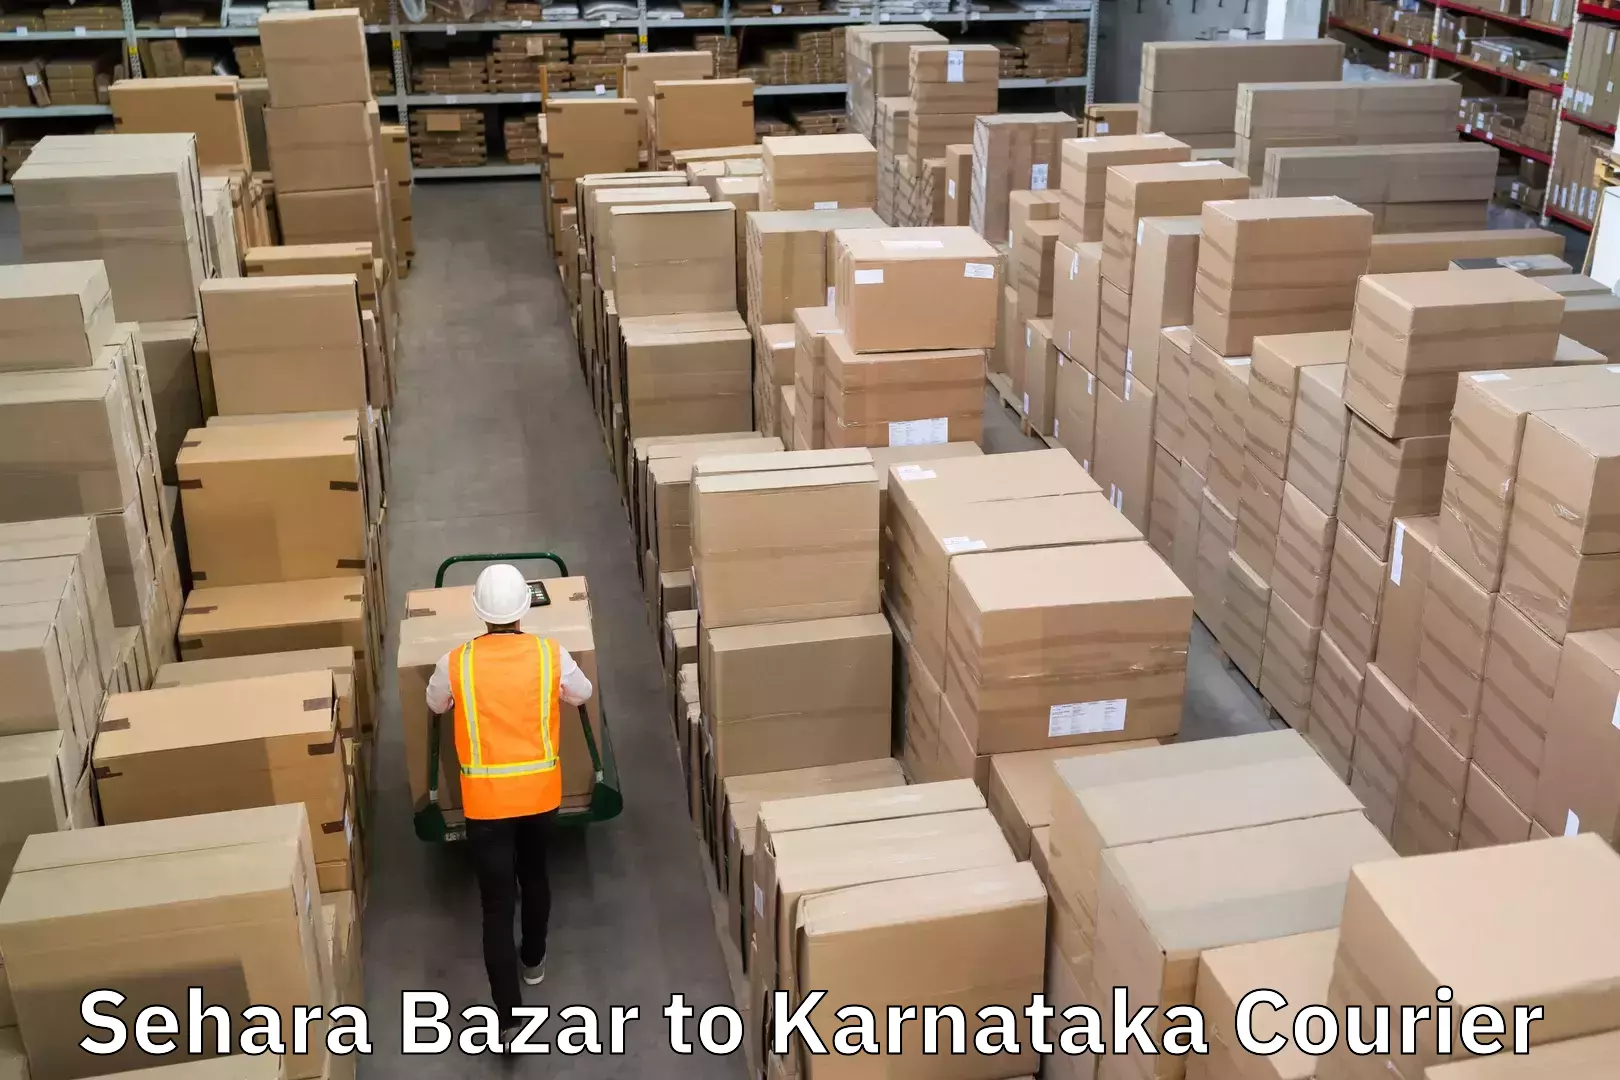 User-friendly delivery service Sehara Bazar to Karnataka